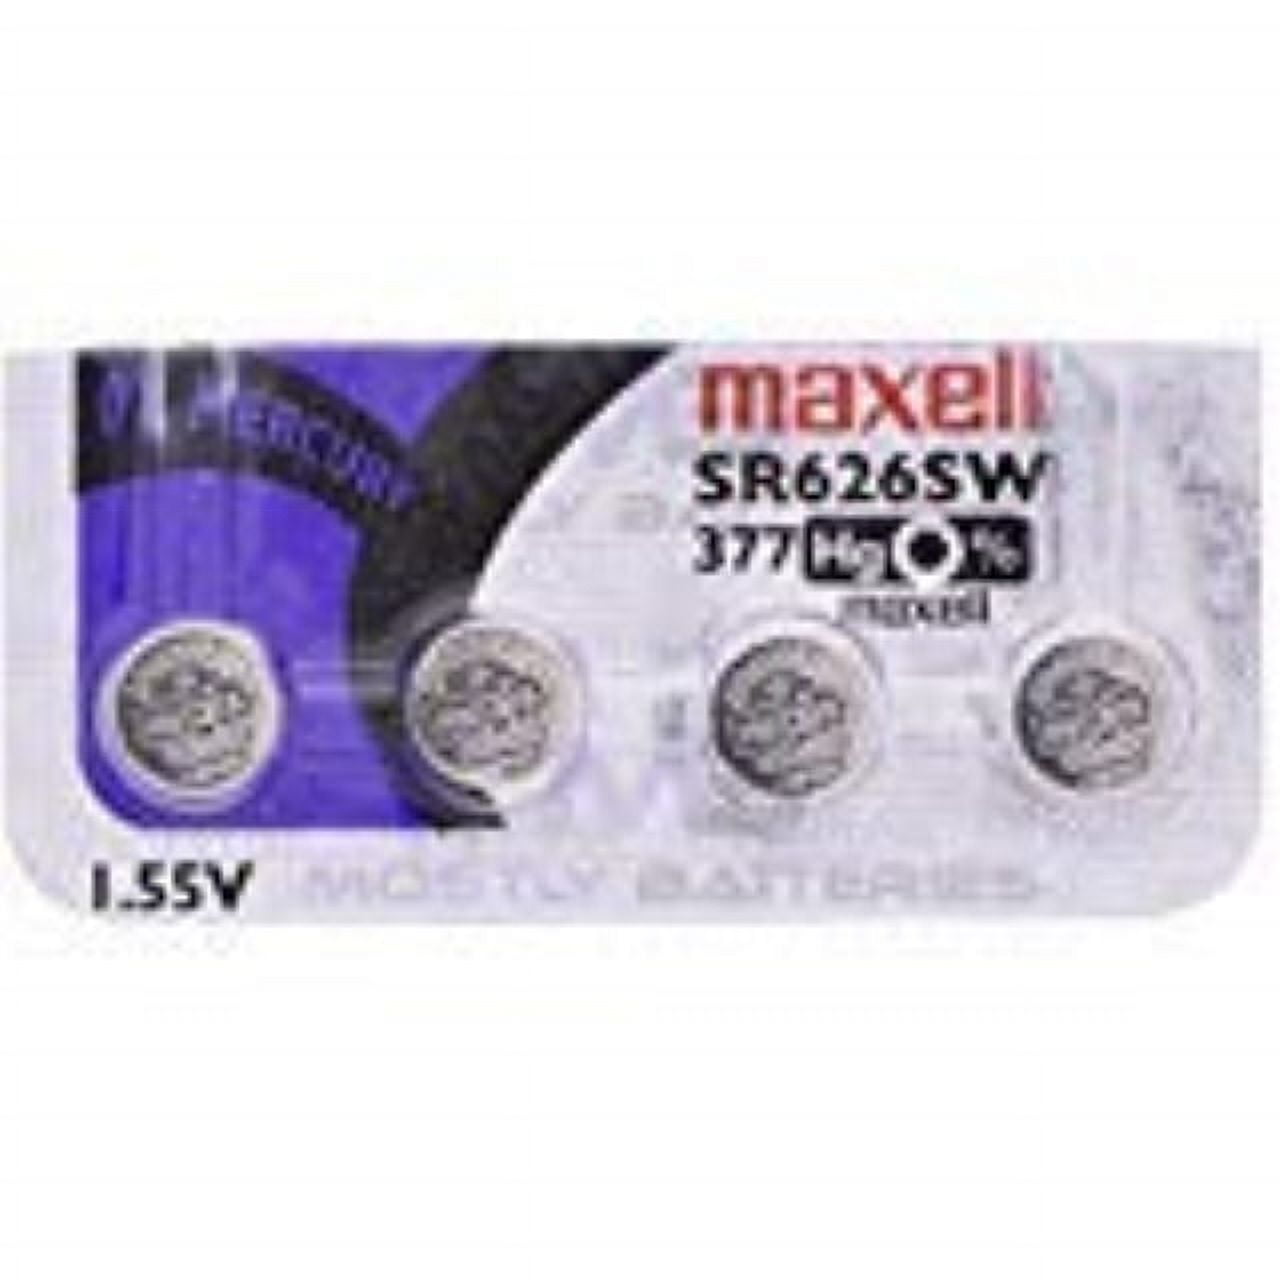 Maxell 377 SR626SW 1.55 Volt Silver Oxide Watch Batteries Factory Hologram  (4 Batteries) 